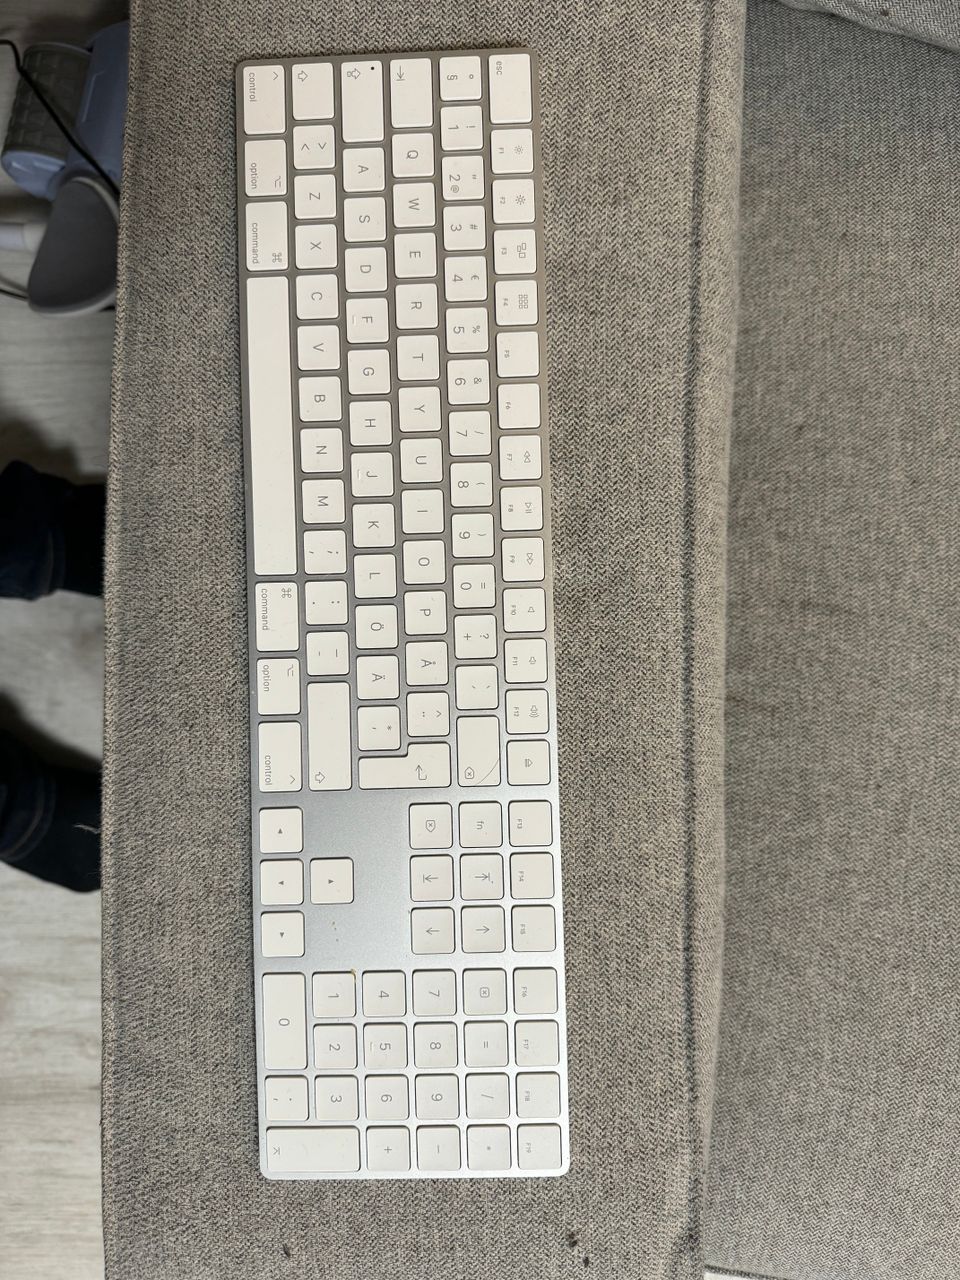 Apple Magic Keyboard 2 full size